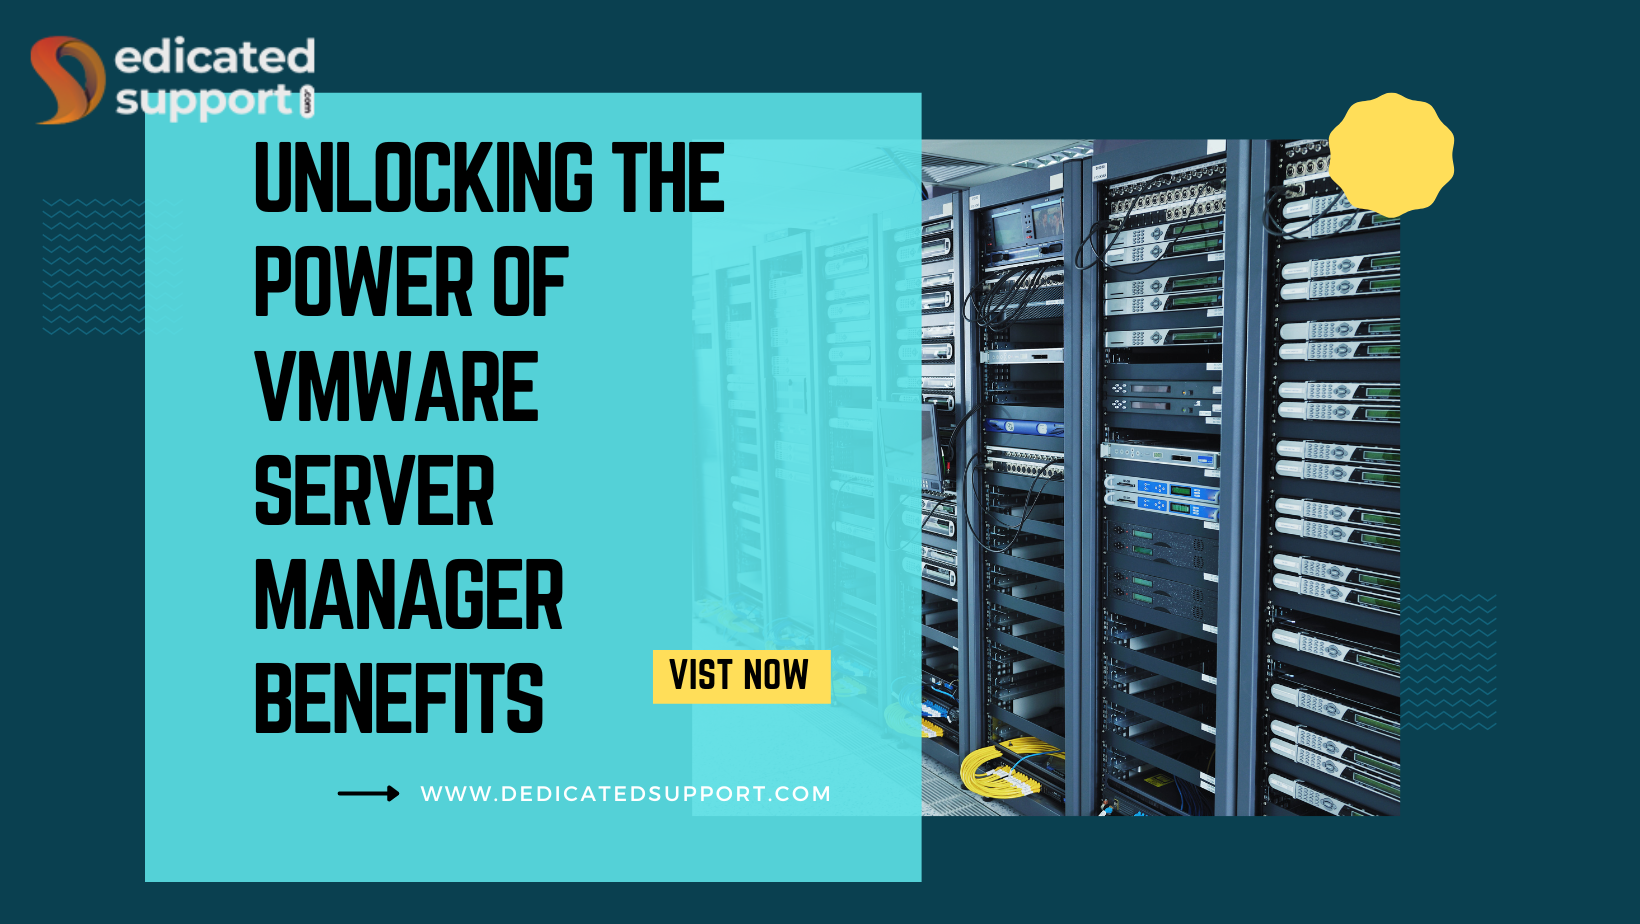 VMware Server Manager Benefits